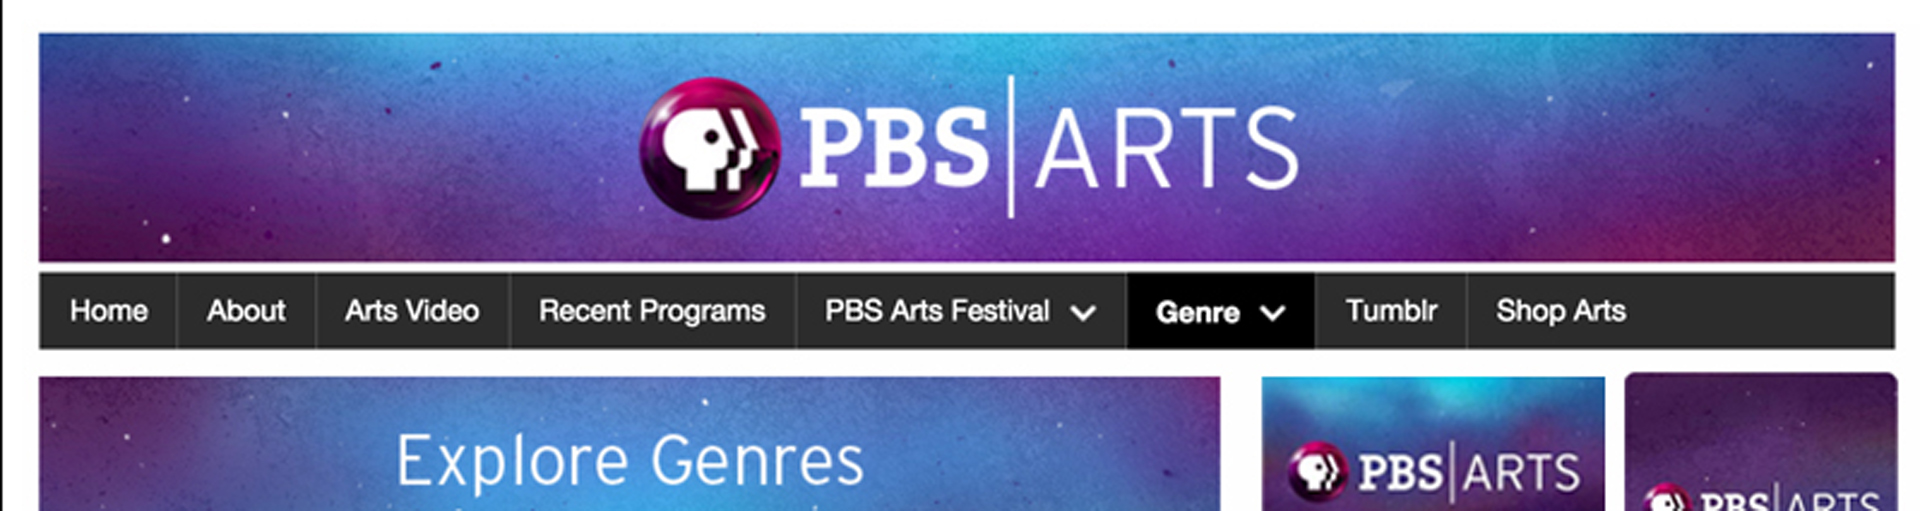 PBS Arts banner